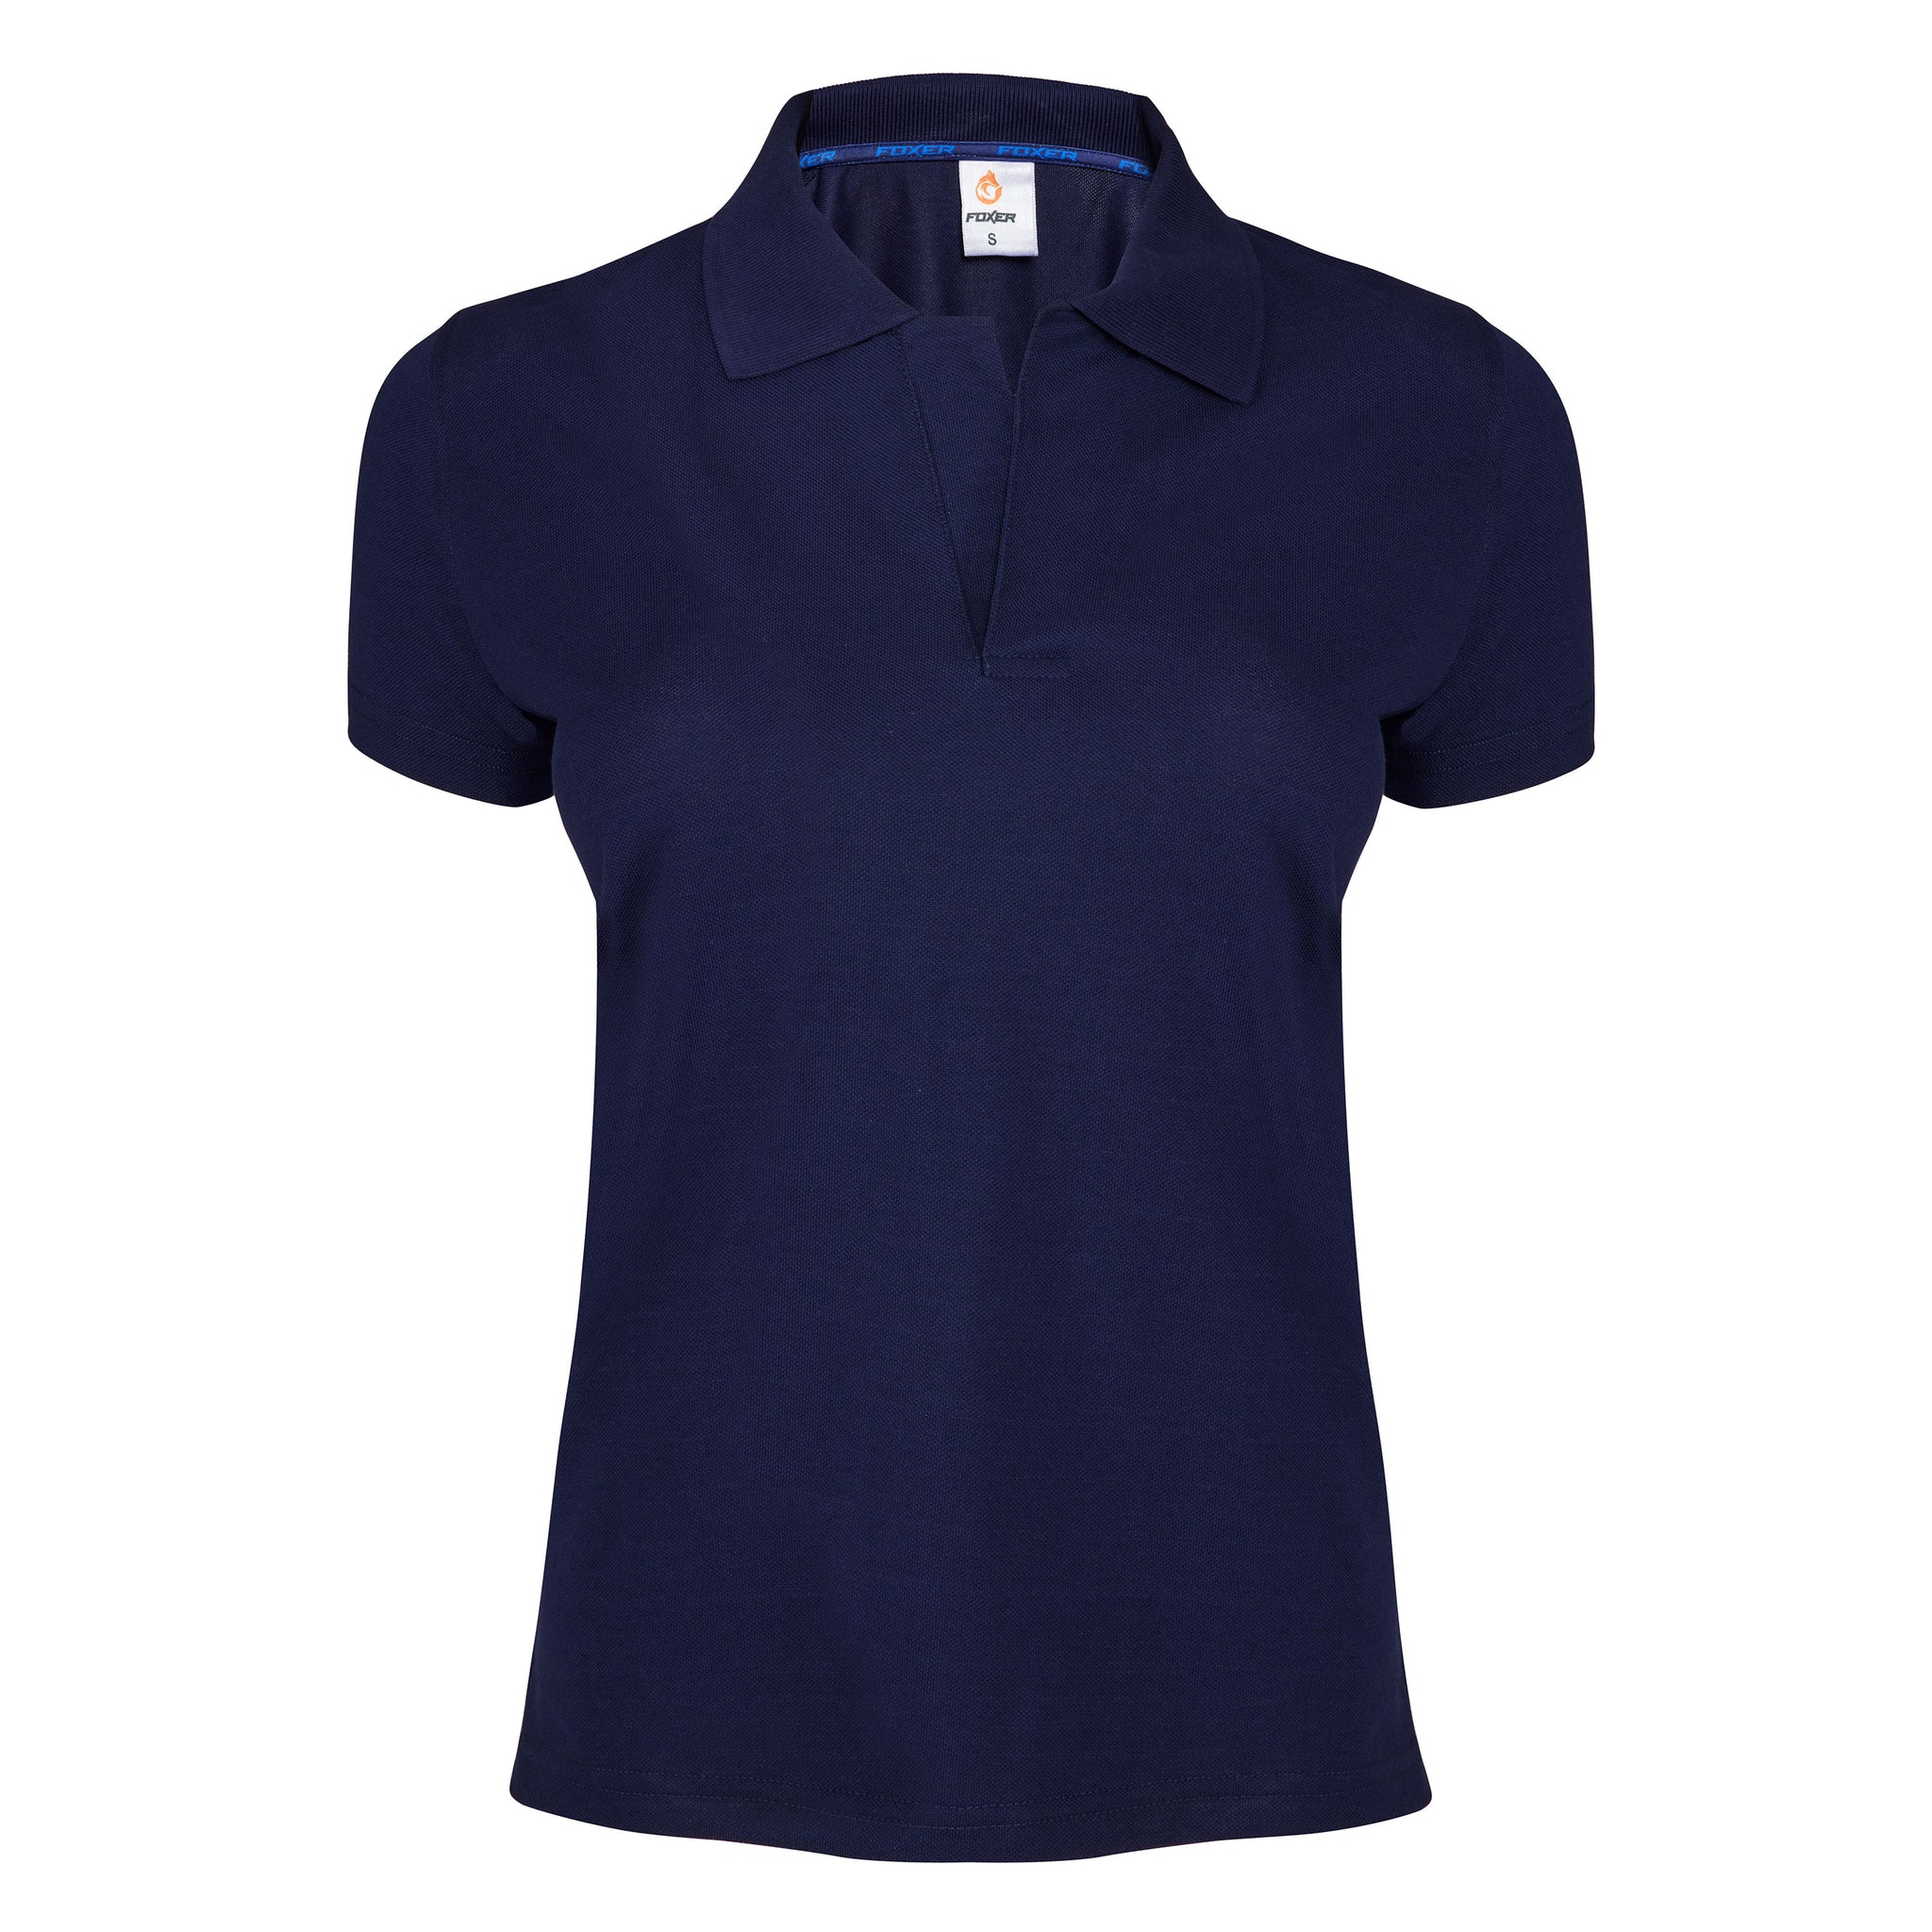 Foxer Women's Dark Blue Polo Basic T-shirt FTW-LA-013 L